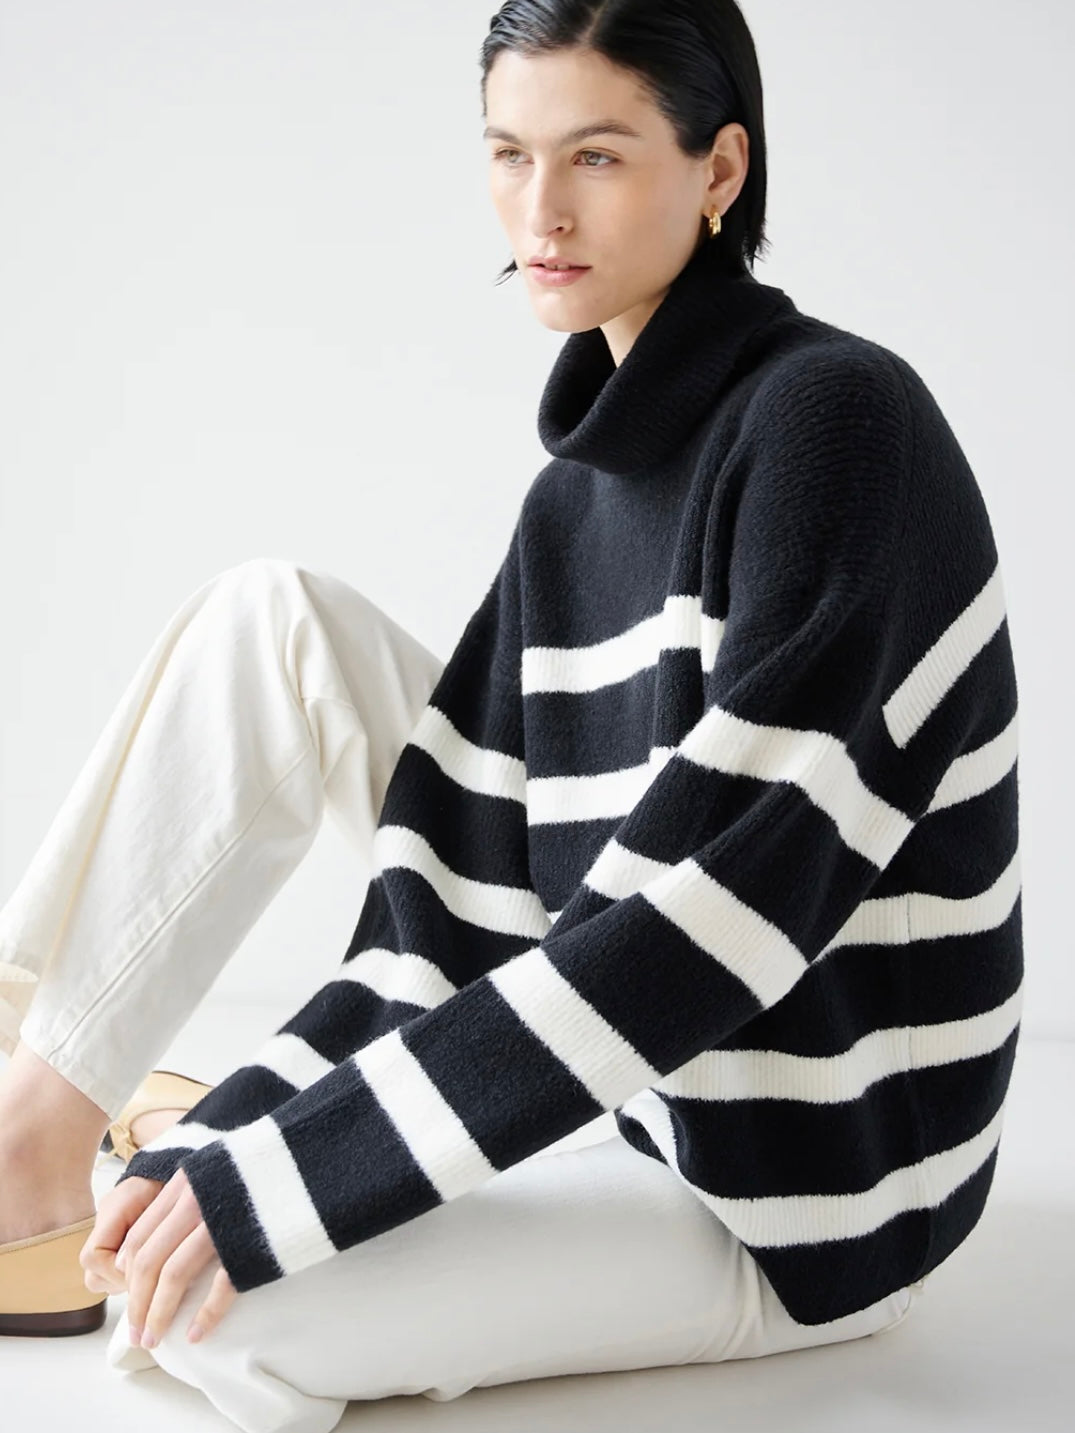 Velvet Encino Sweater in Black/Milk